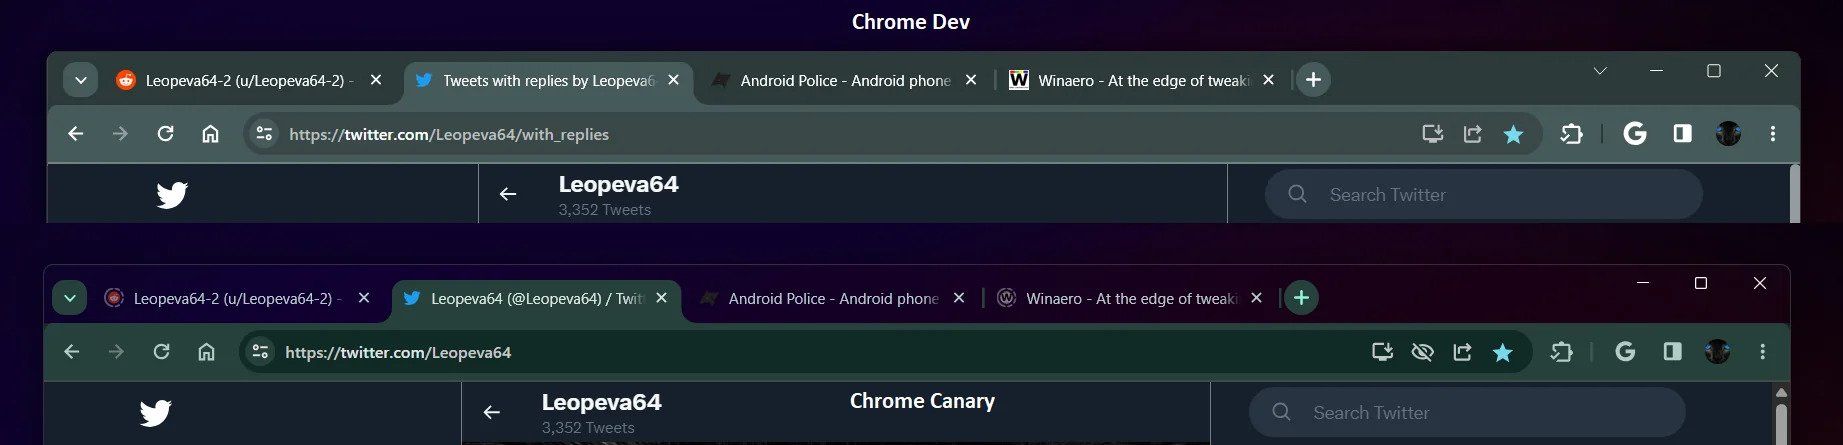 Chrome-Canary-116-Dev-theme-darker